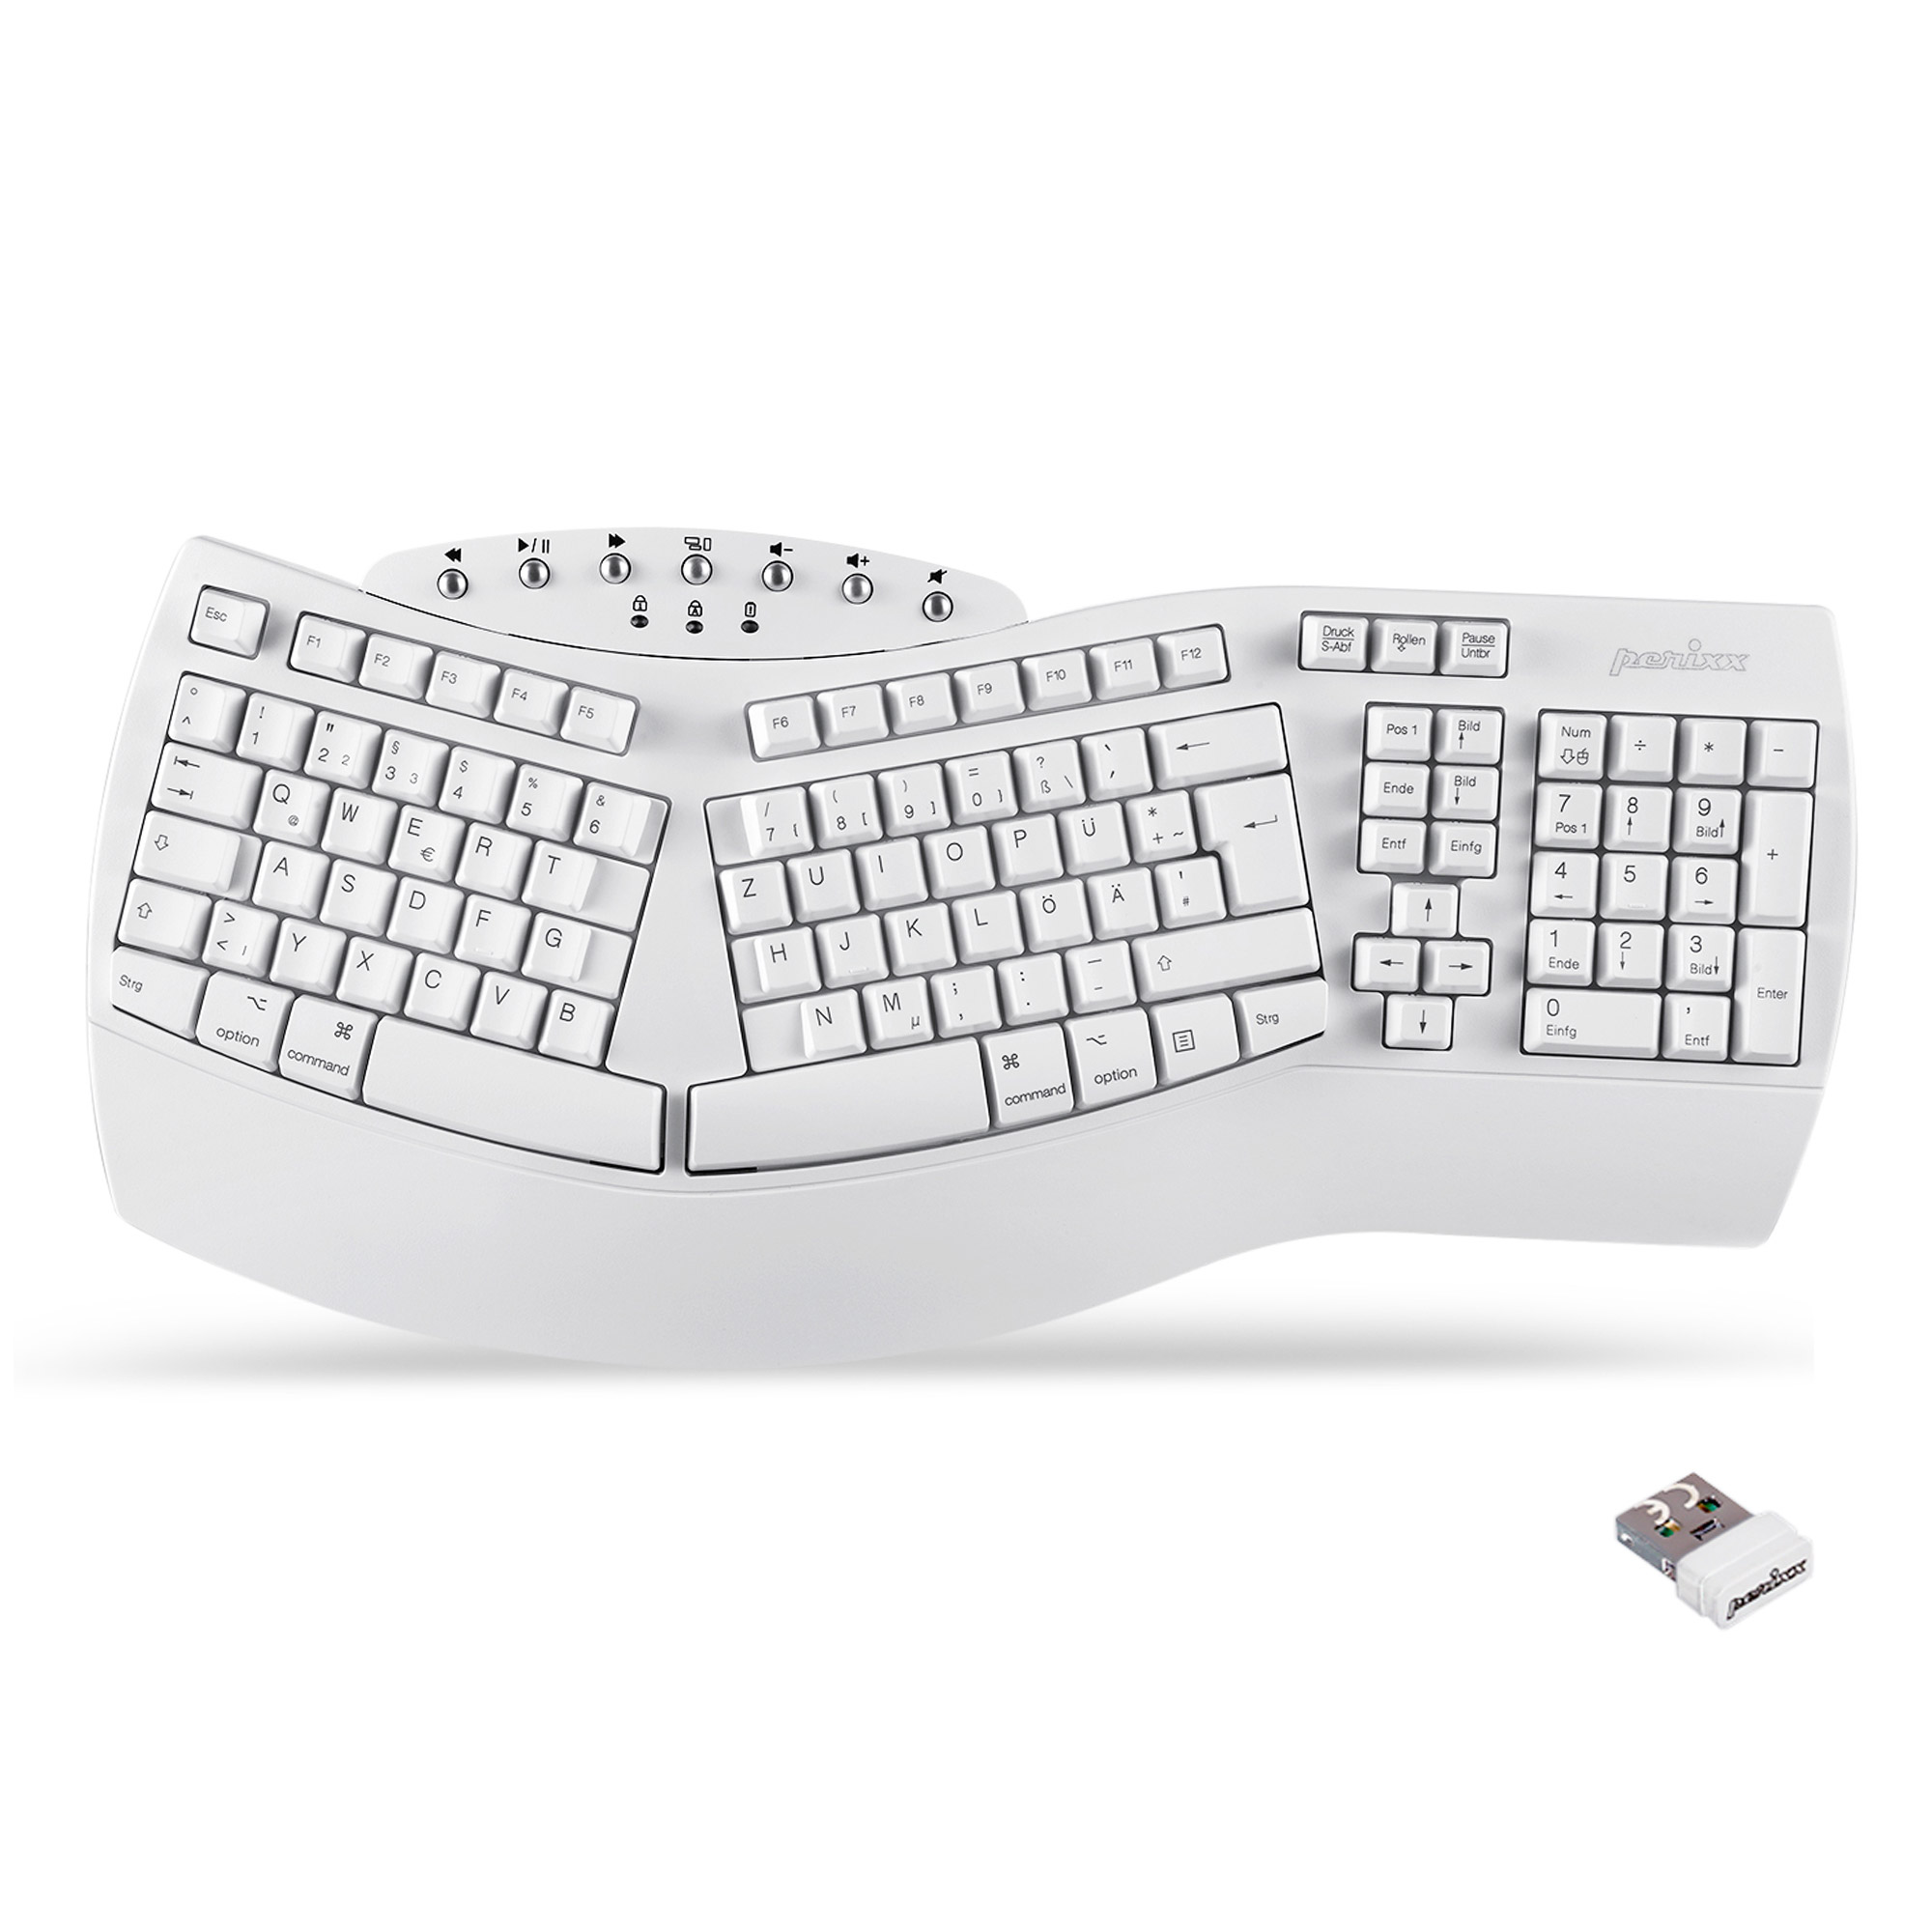 Perixx PERIBOARD-612B DE, ergonomische Tastatur, Dualmodus, Funk/Bluetooth